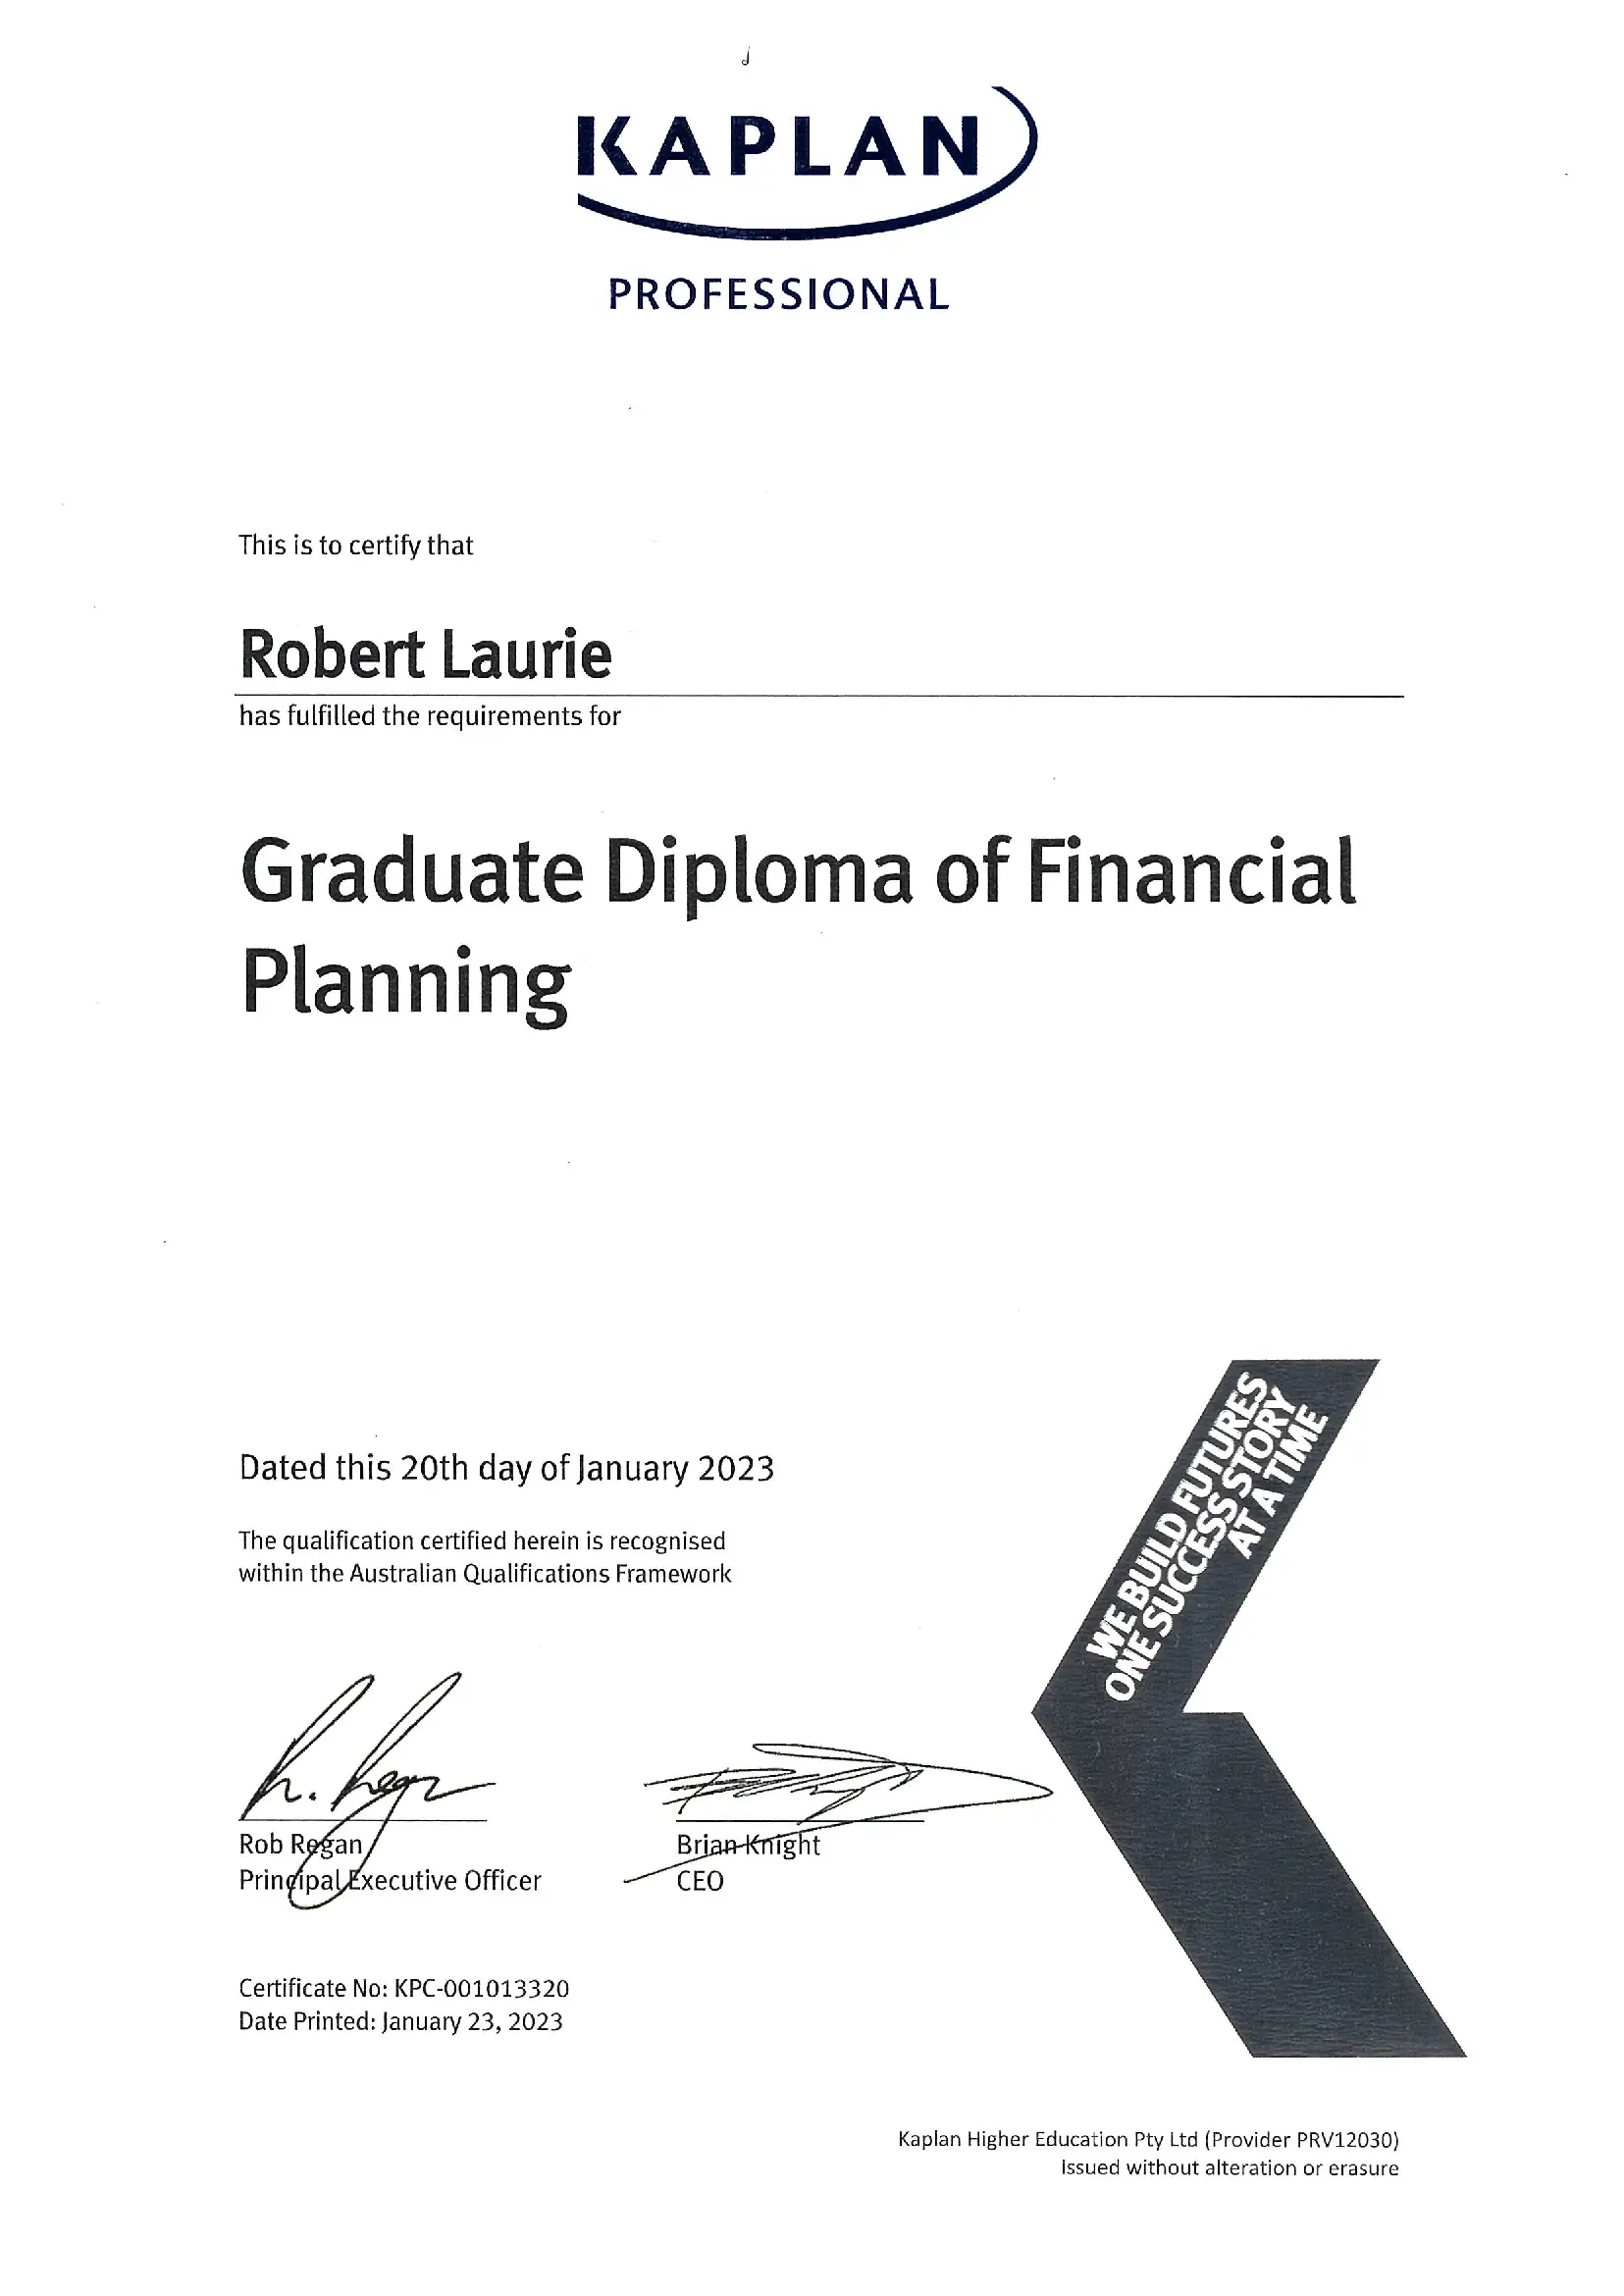 Graduate-Diploma-of-Financial-Planning-Certificate